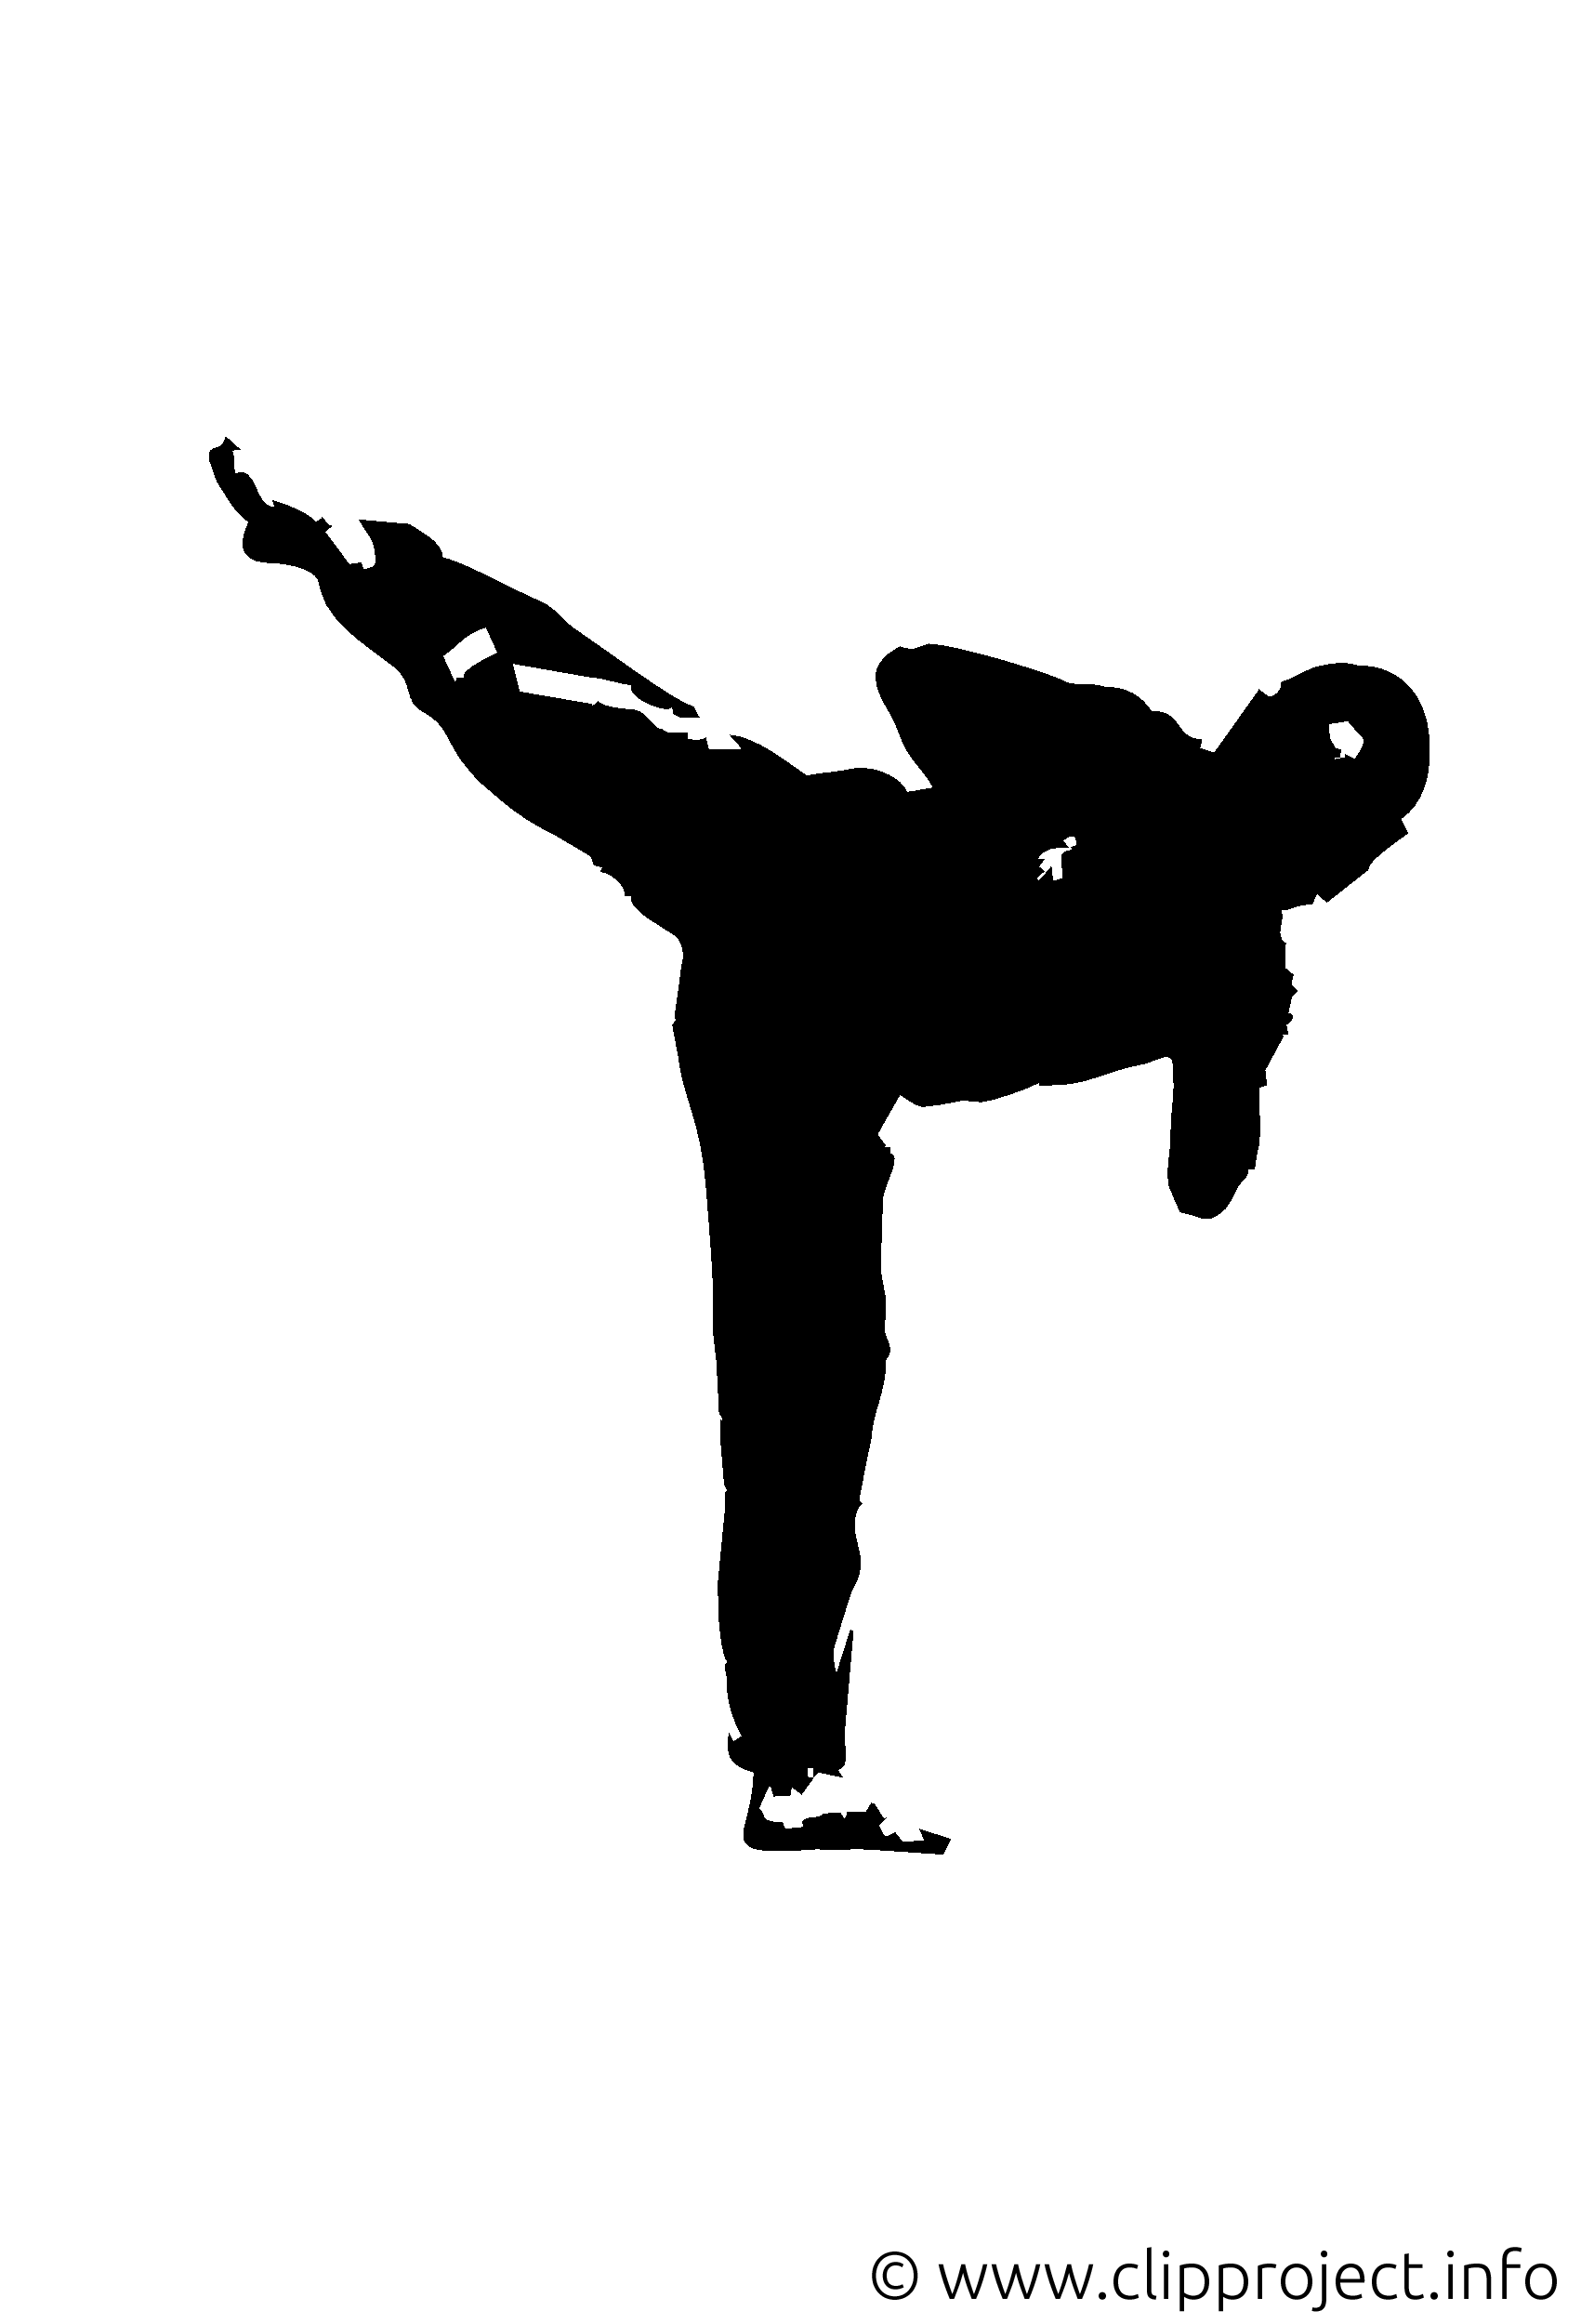 Bildtitel  Silhouette Karate Kick Clipart   Image